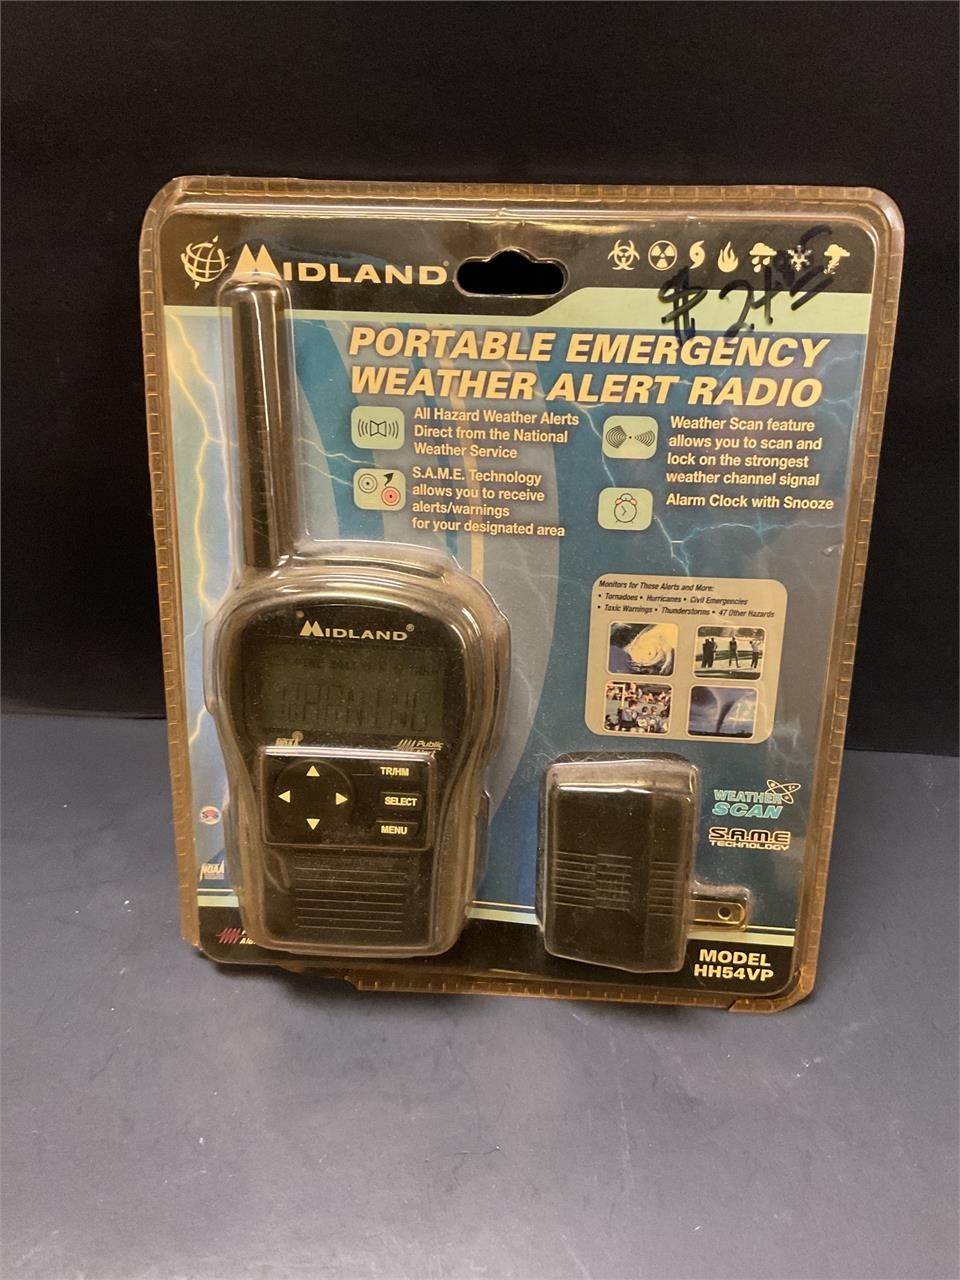 Midland emergency radio